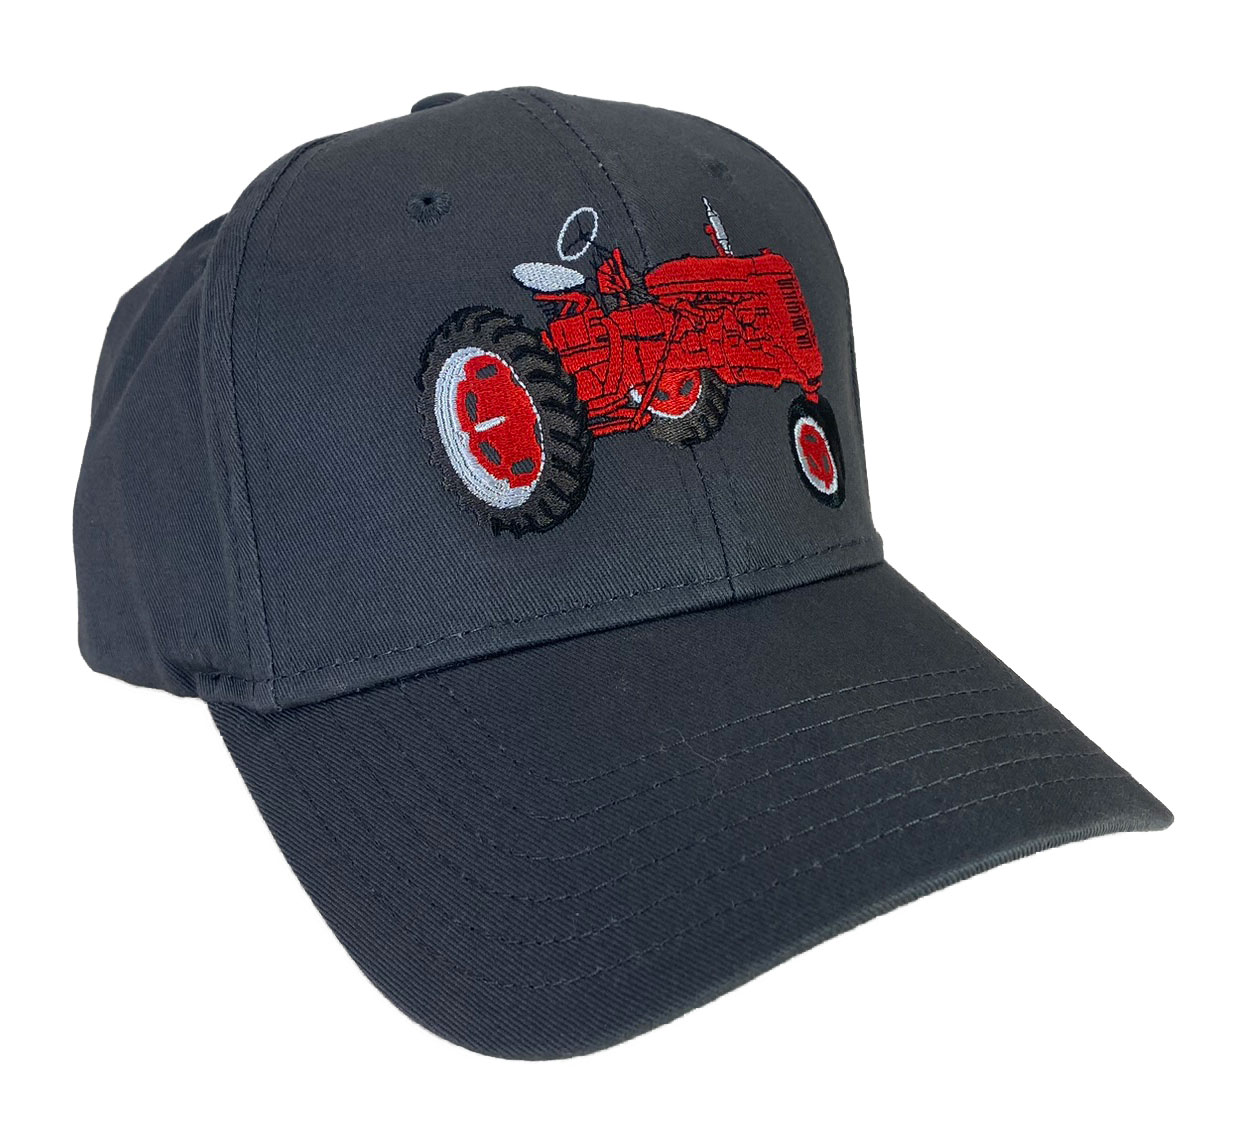 International McCormick Logos Hat Farmall #44-8000CGV Red Cap - Tractor Embroidered Locomotive